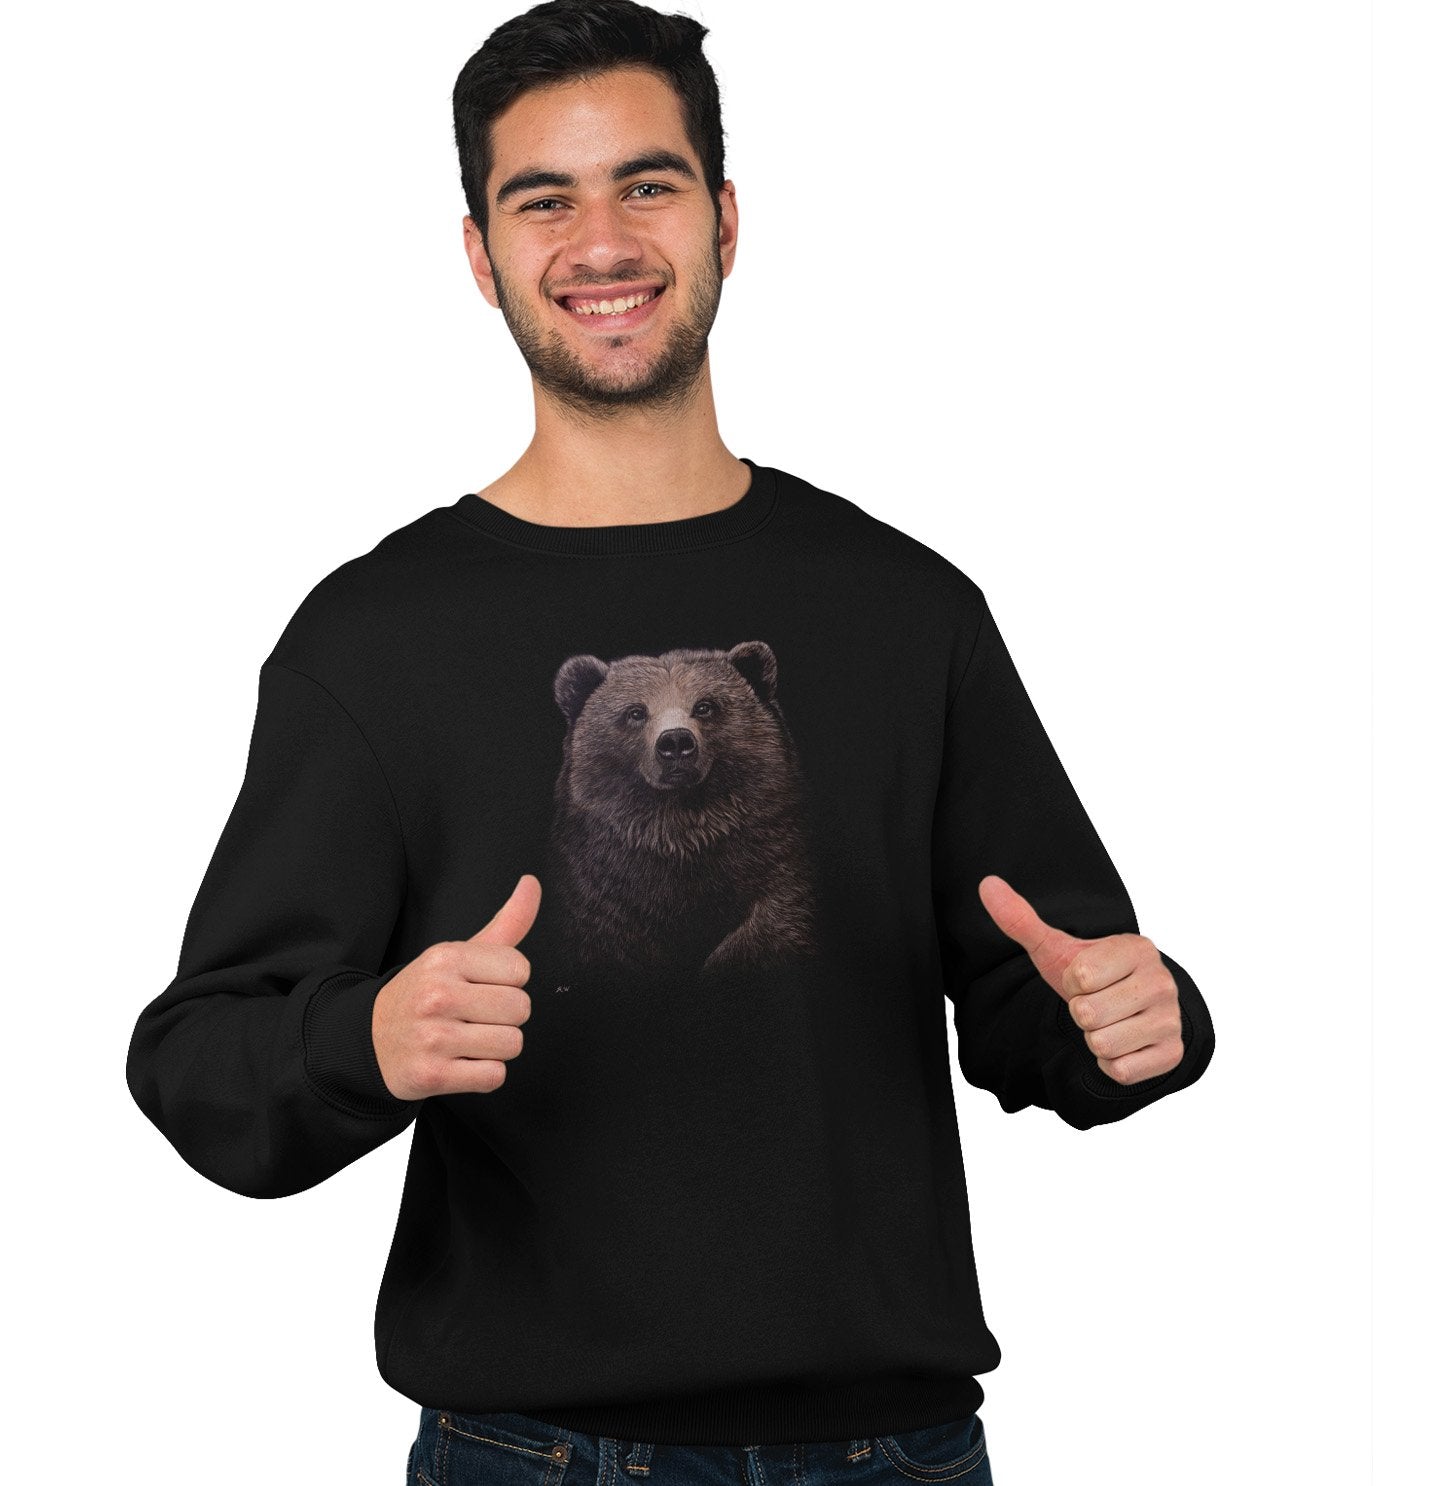 Animal Pride - Grizzly Bear on Black - Adult Unisex Crewneck Sweatshirt